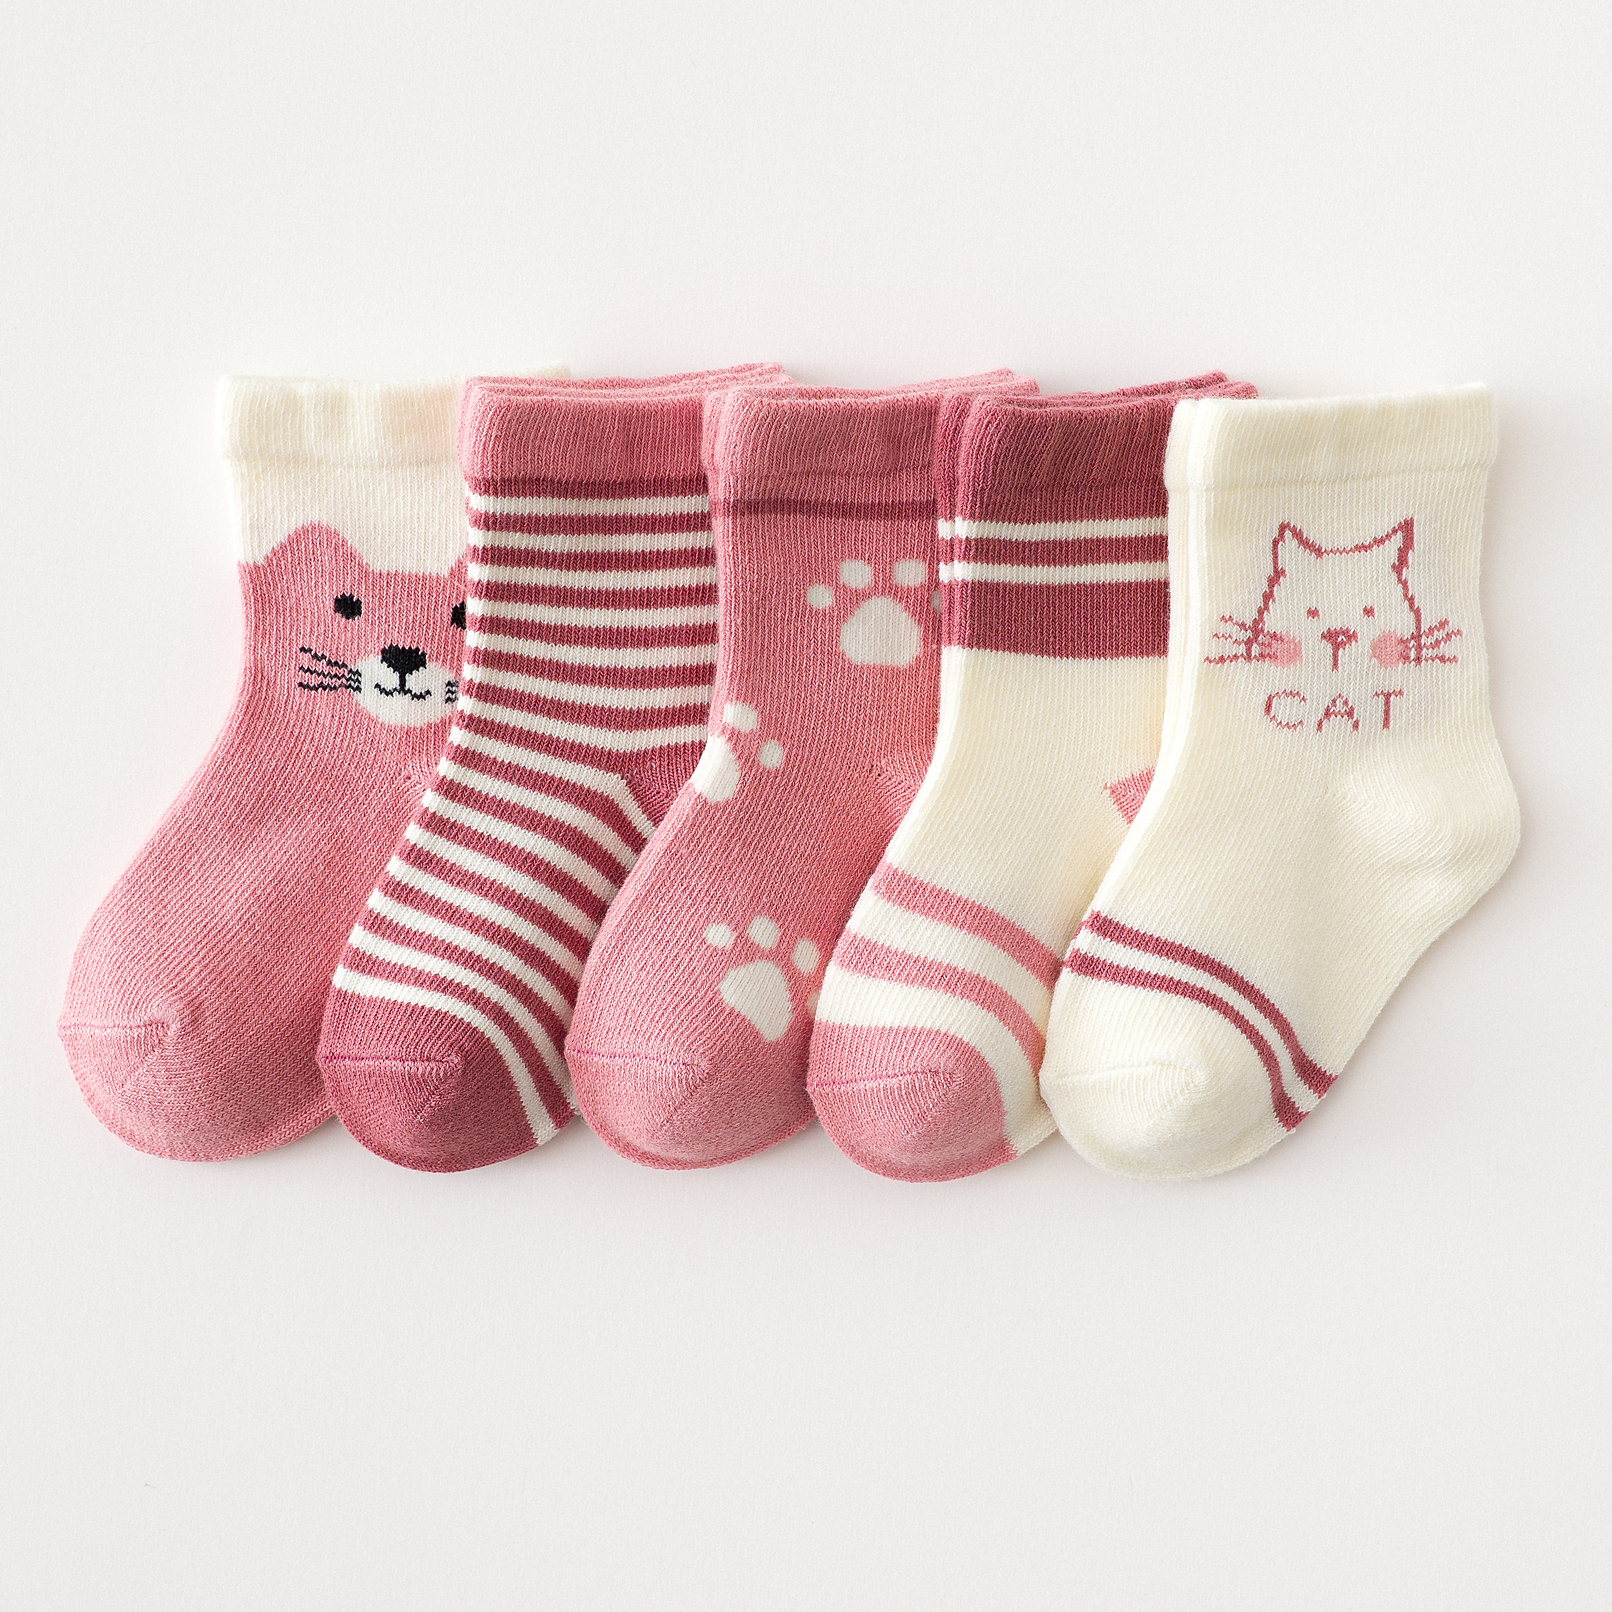 5c7d0ba3 dccb 49ac 9508 6d41d947ba31 - 5 Pairs Of Children Four Seasons Tube Socks Pink Cat